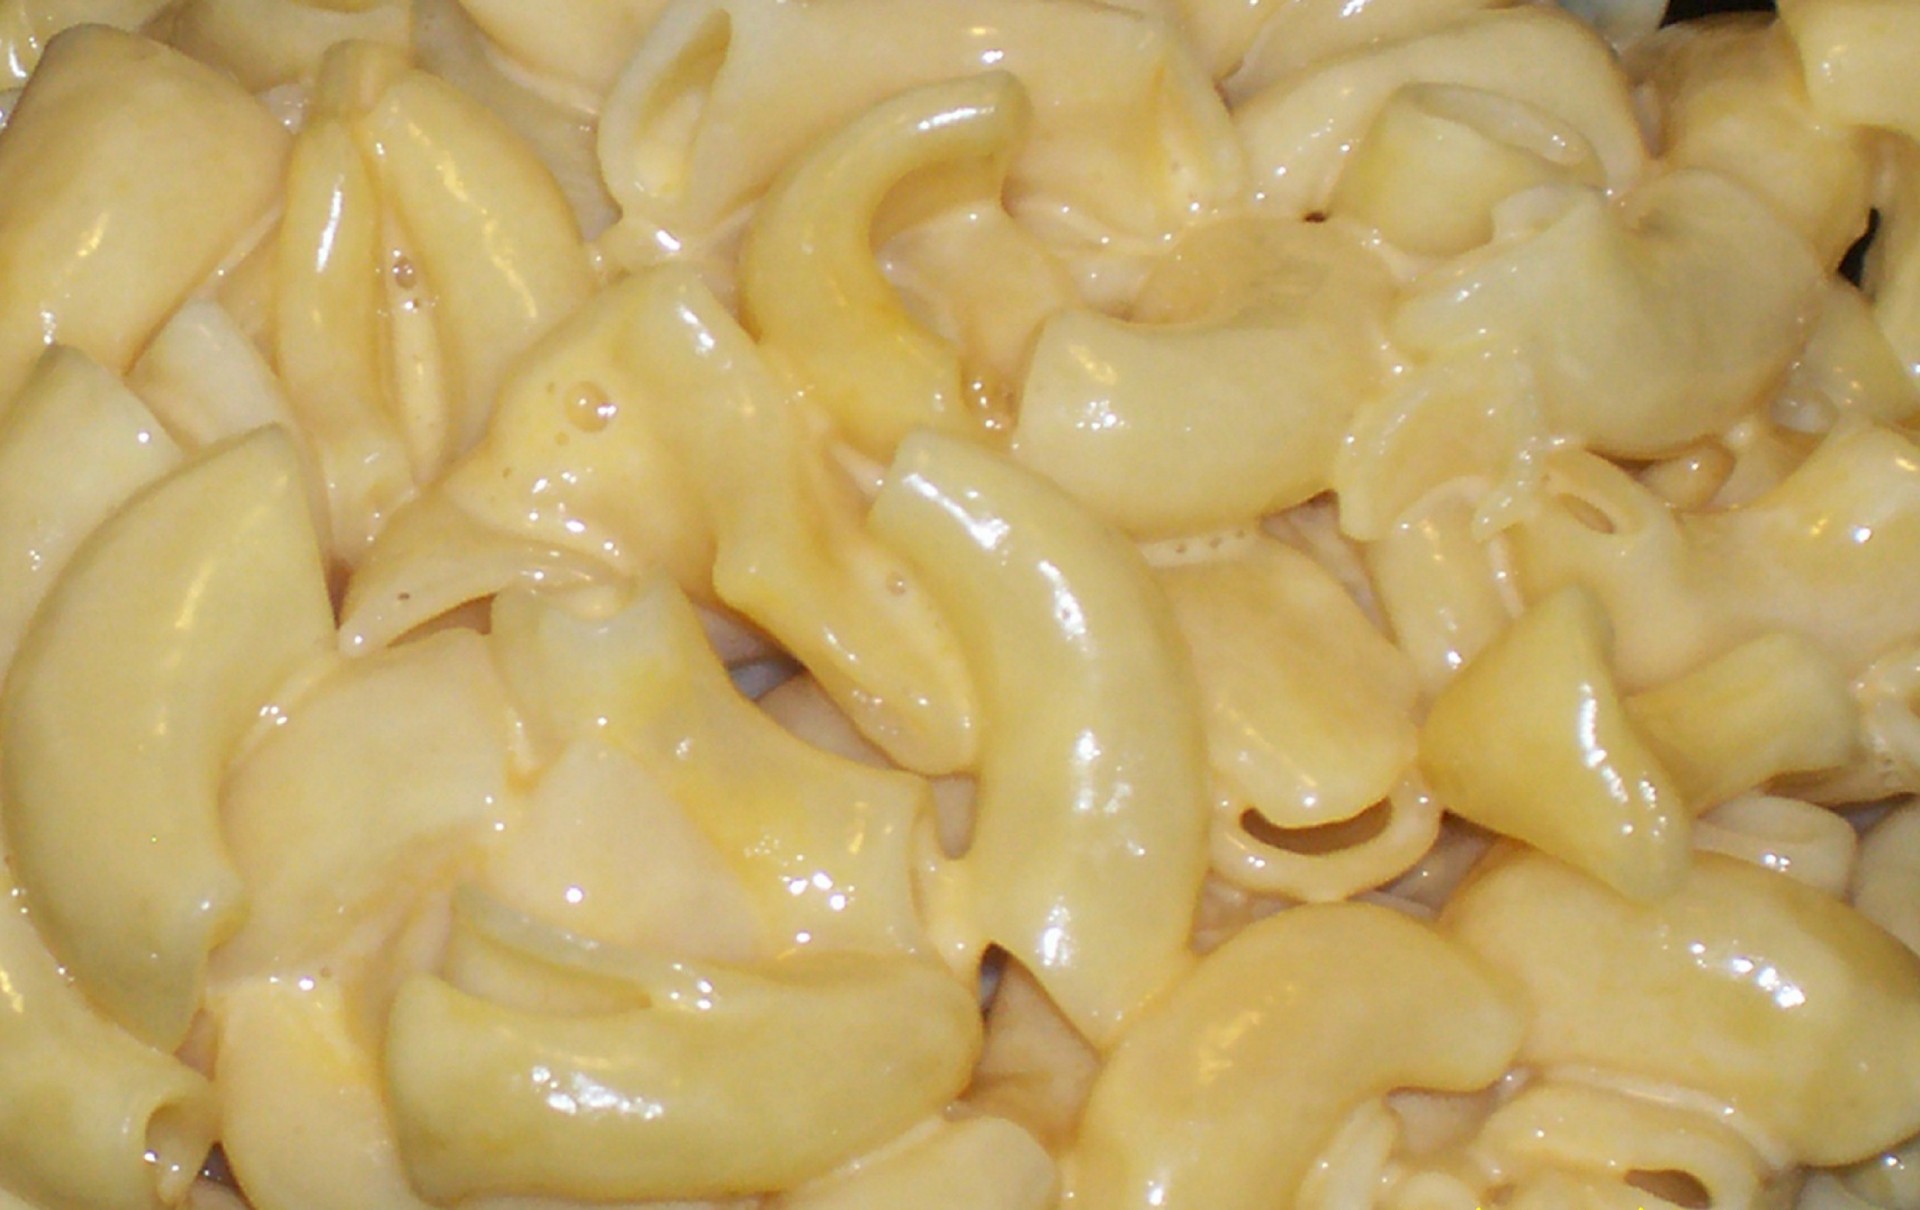 Luke's Microwaved Macaroni and Cheese (Packaged)